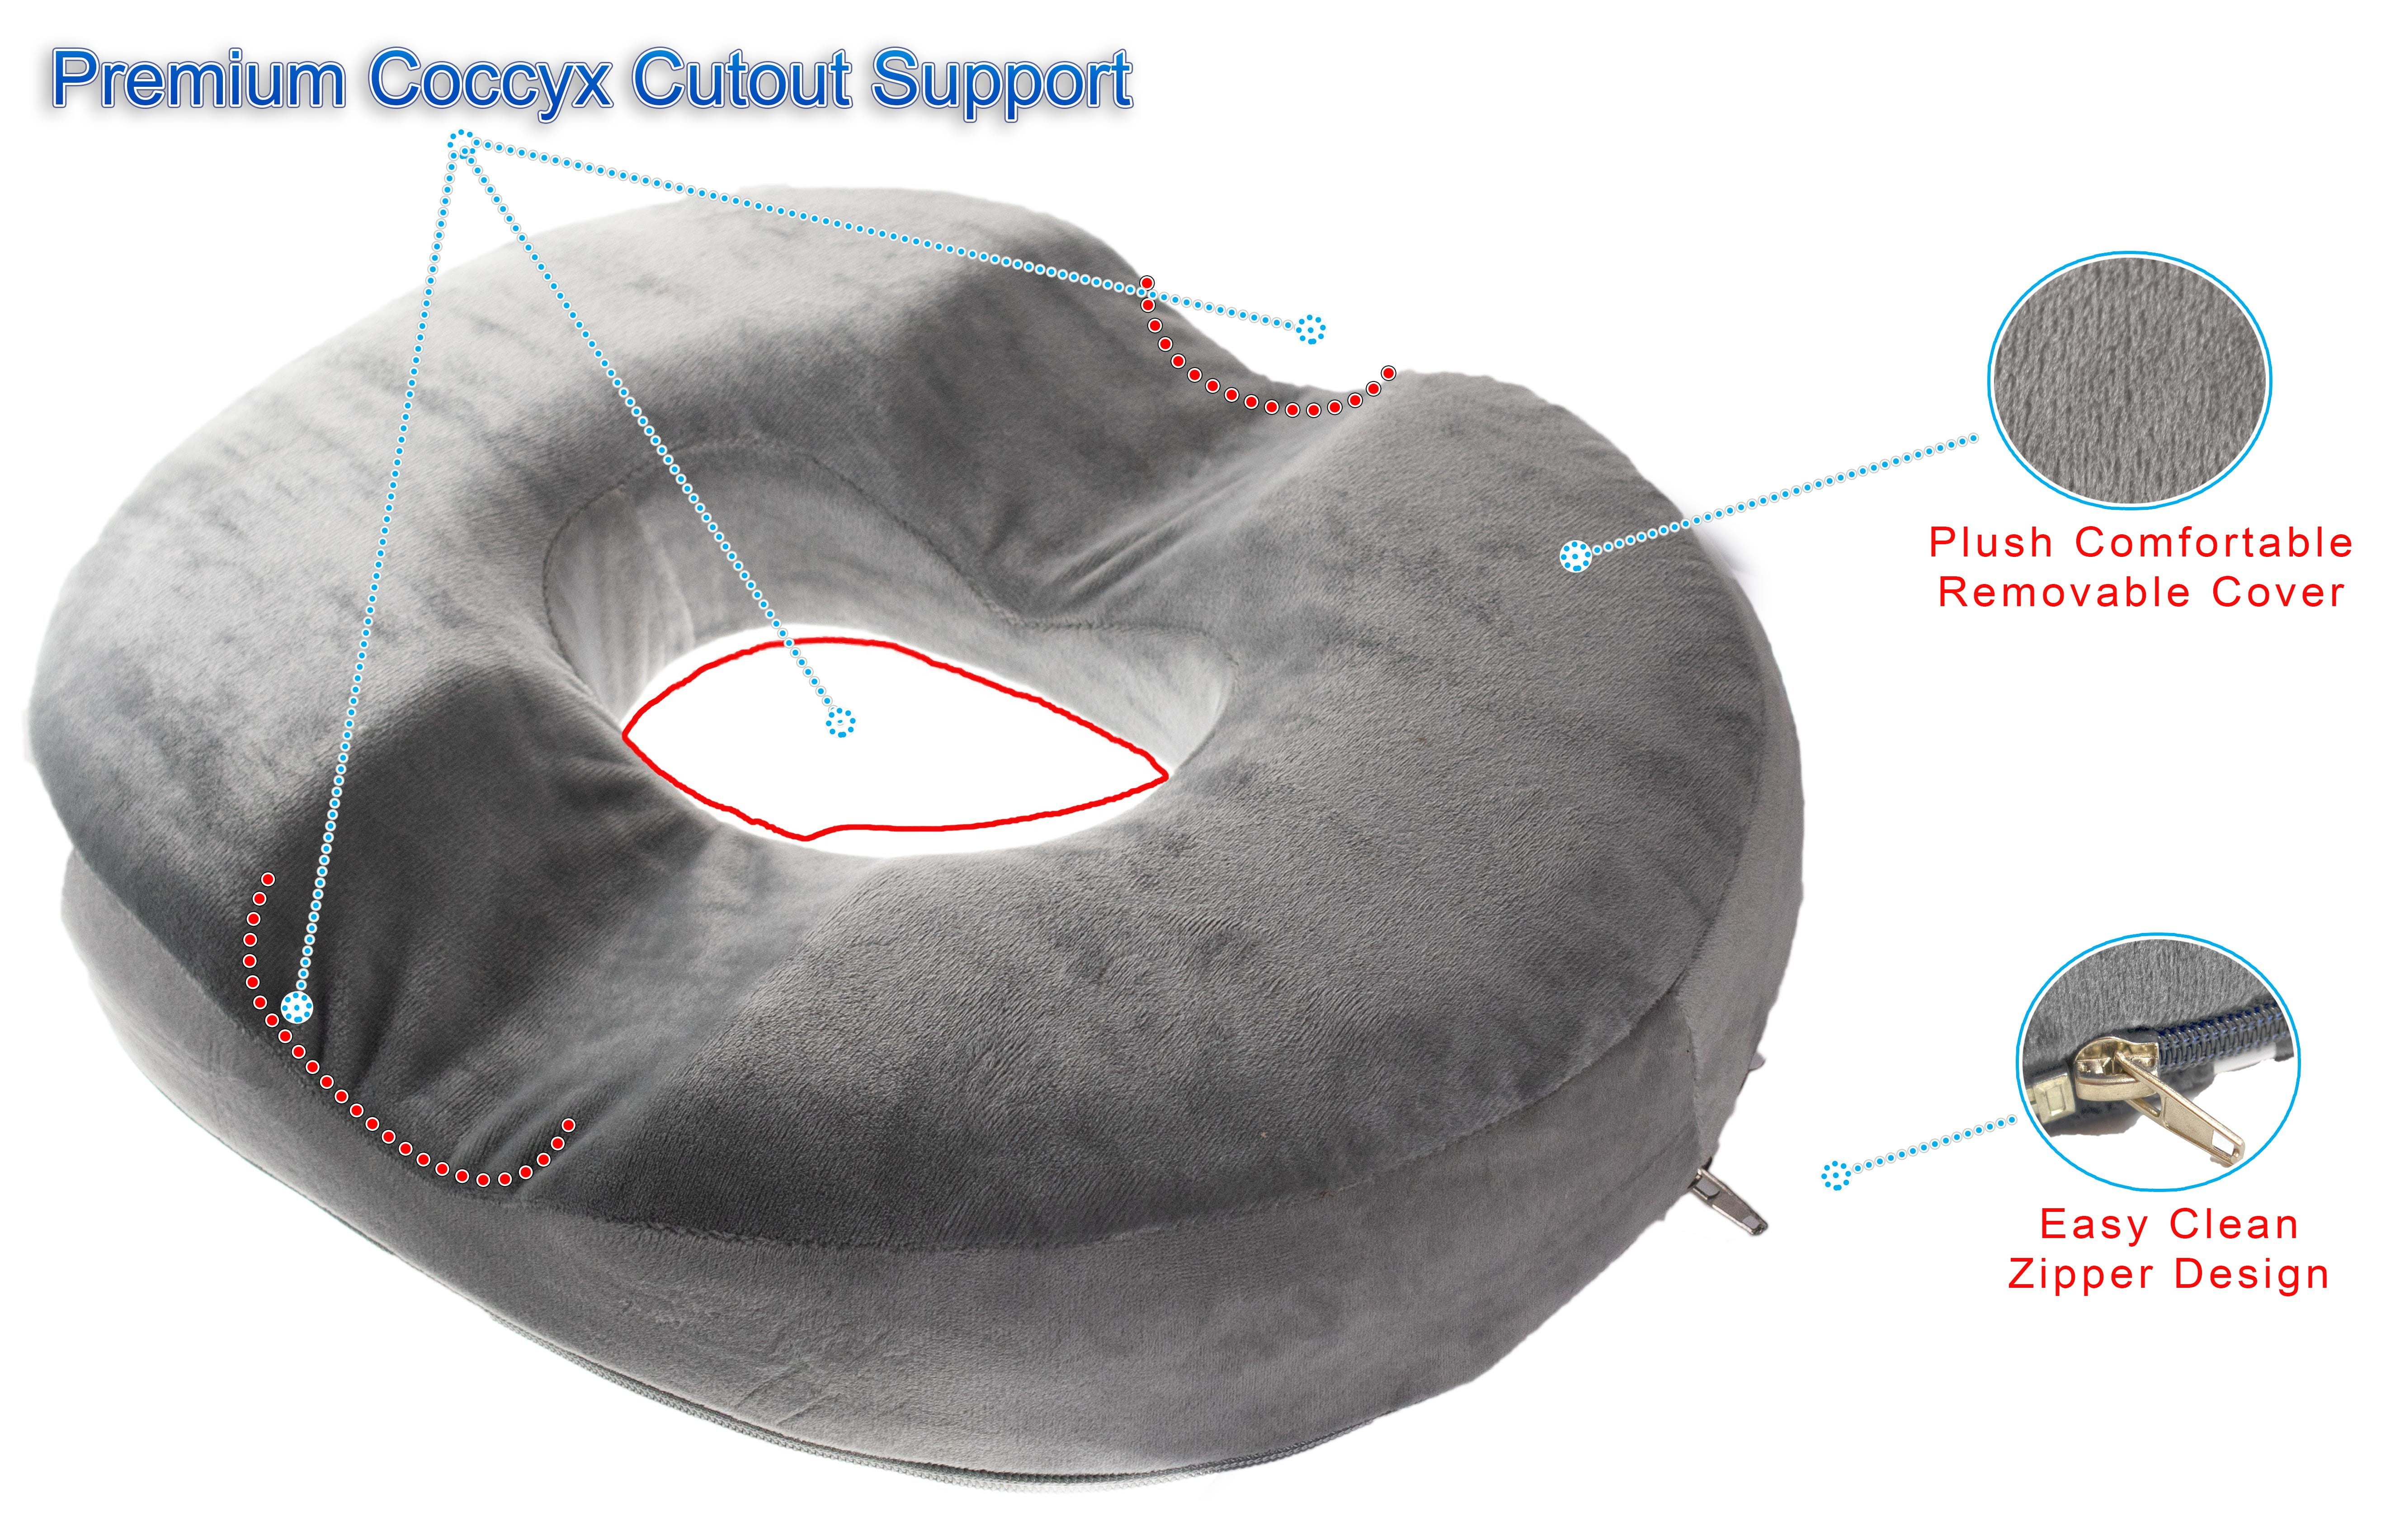  AnboCare Donut Gel Sitting Pillow - Orthopedic Memory